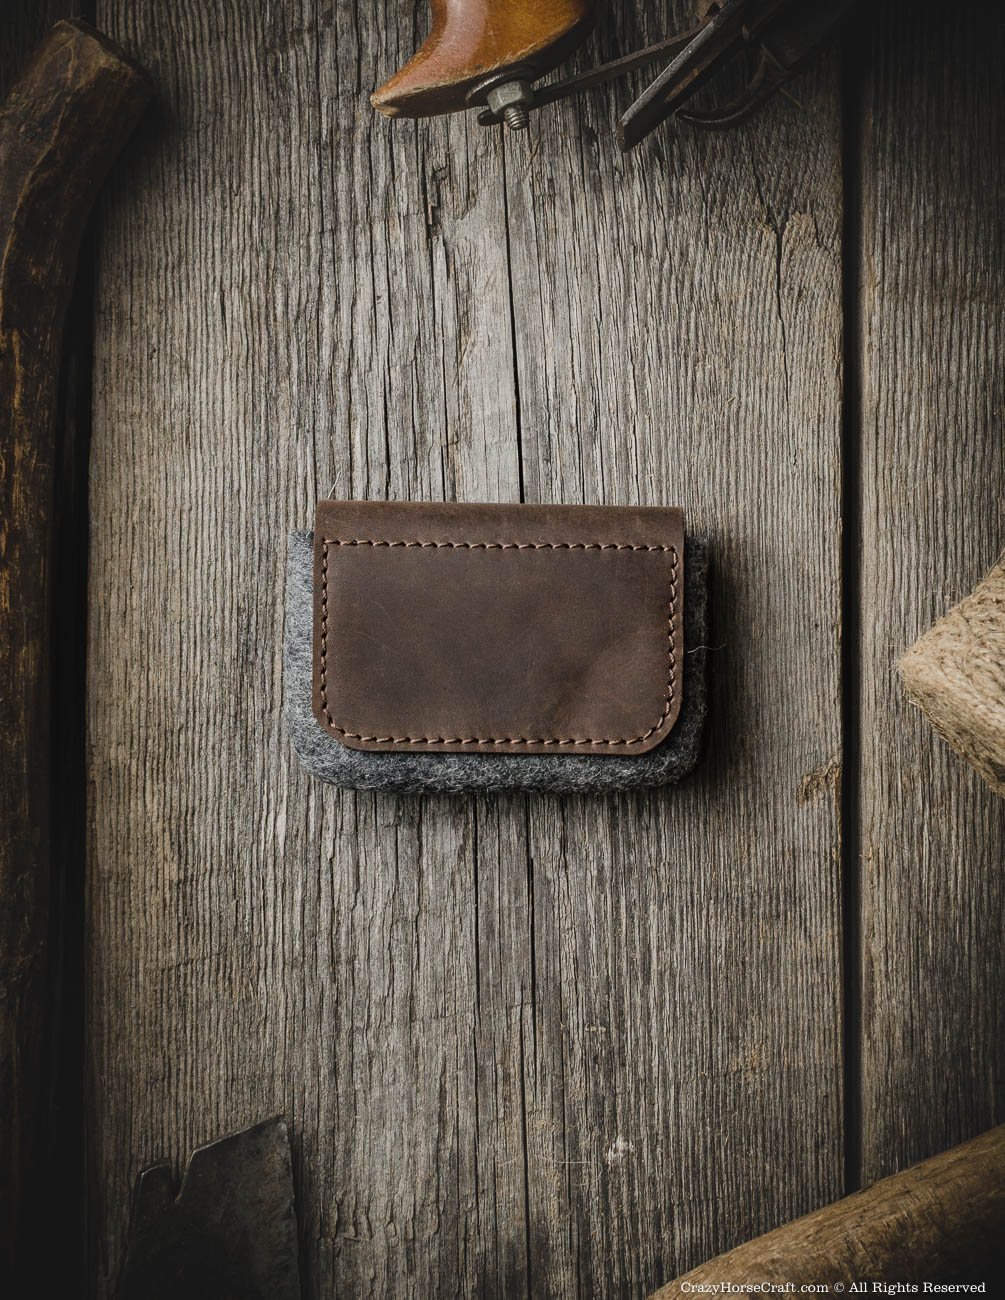 Leather vintage style business card holder, brown back